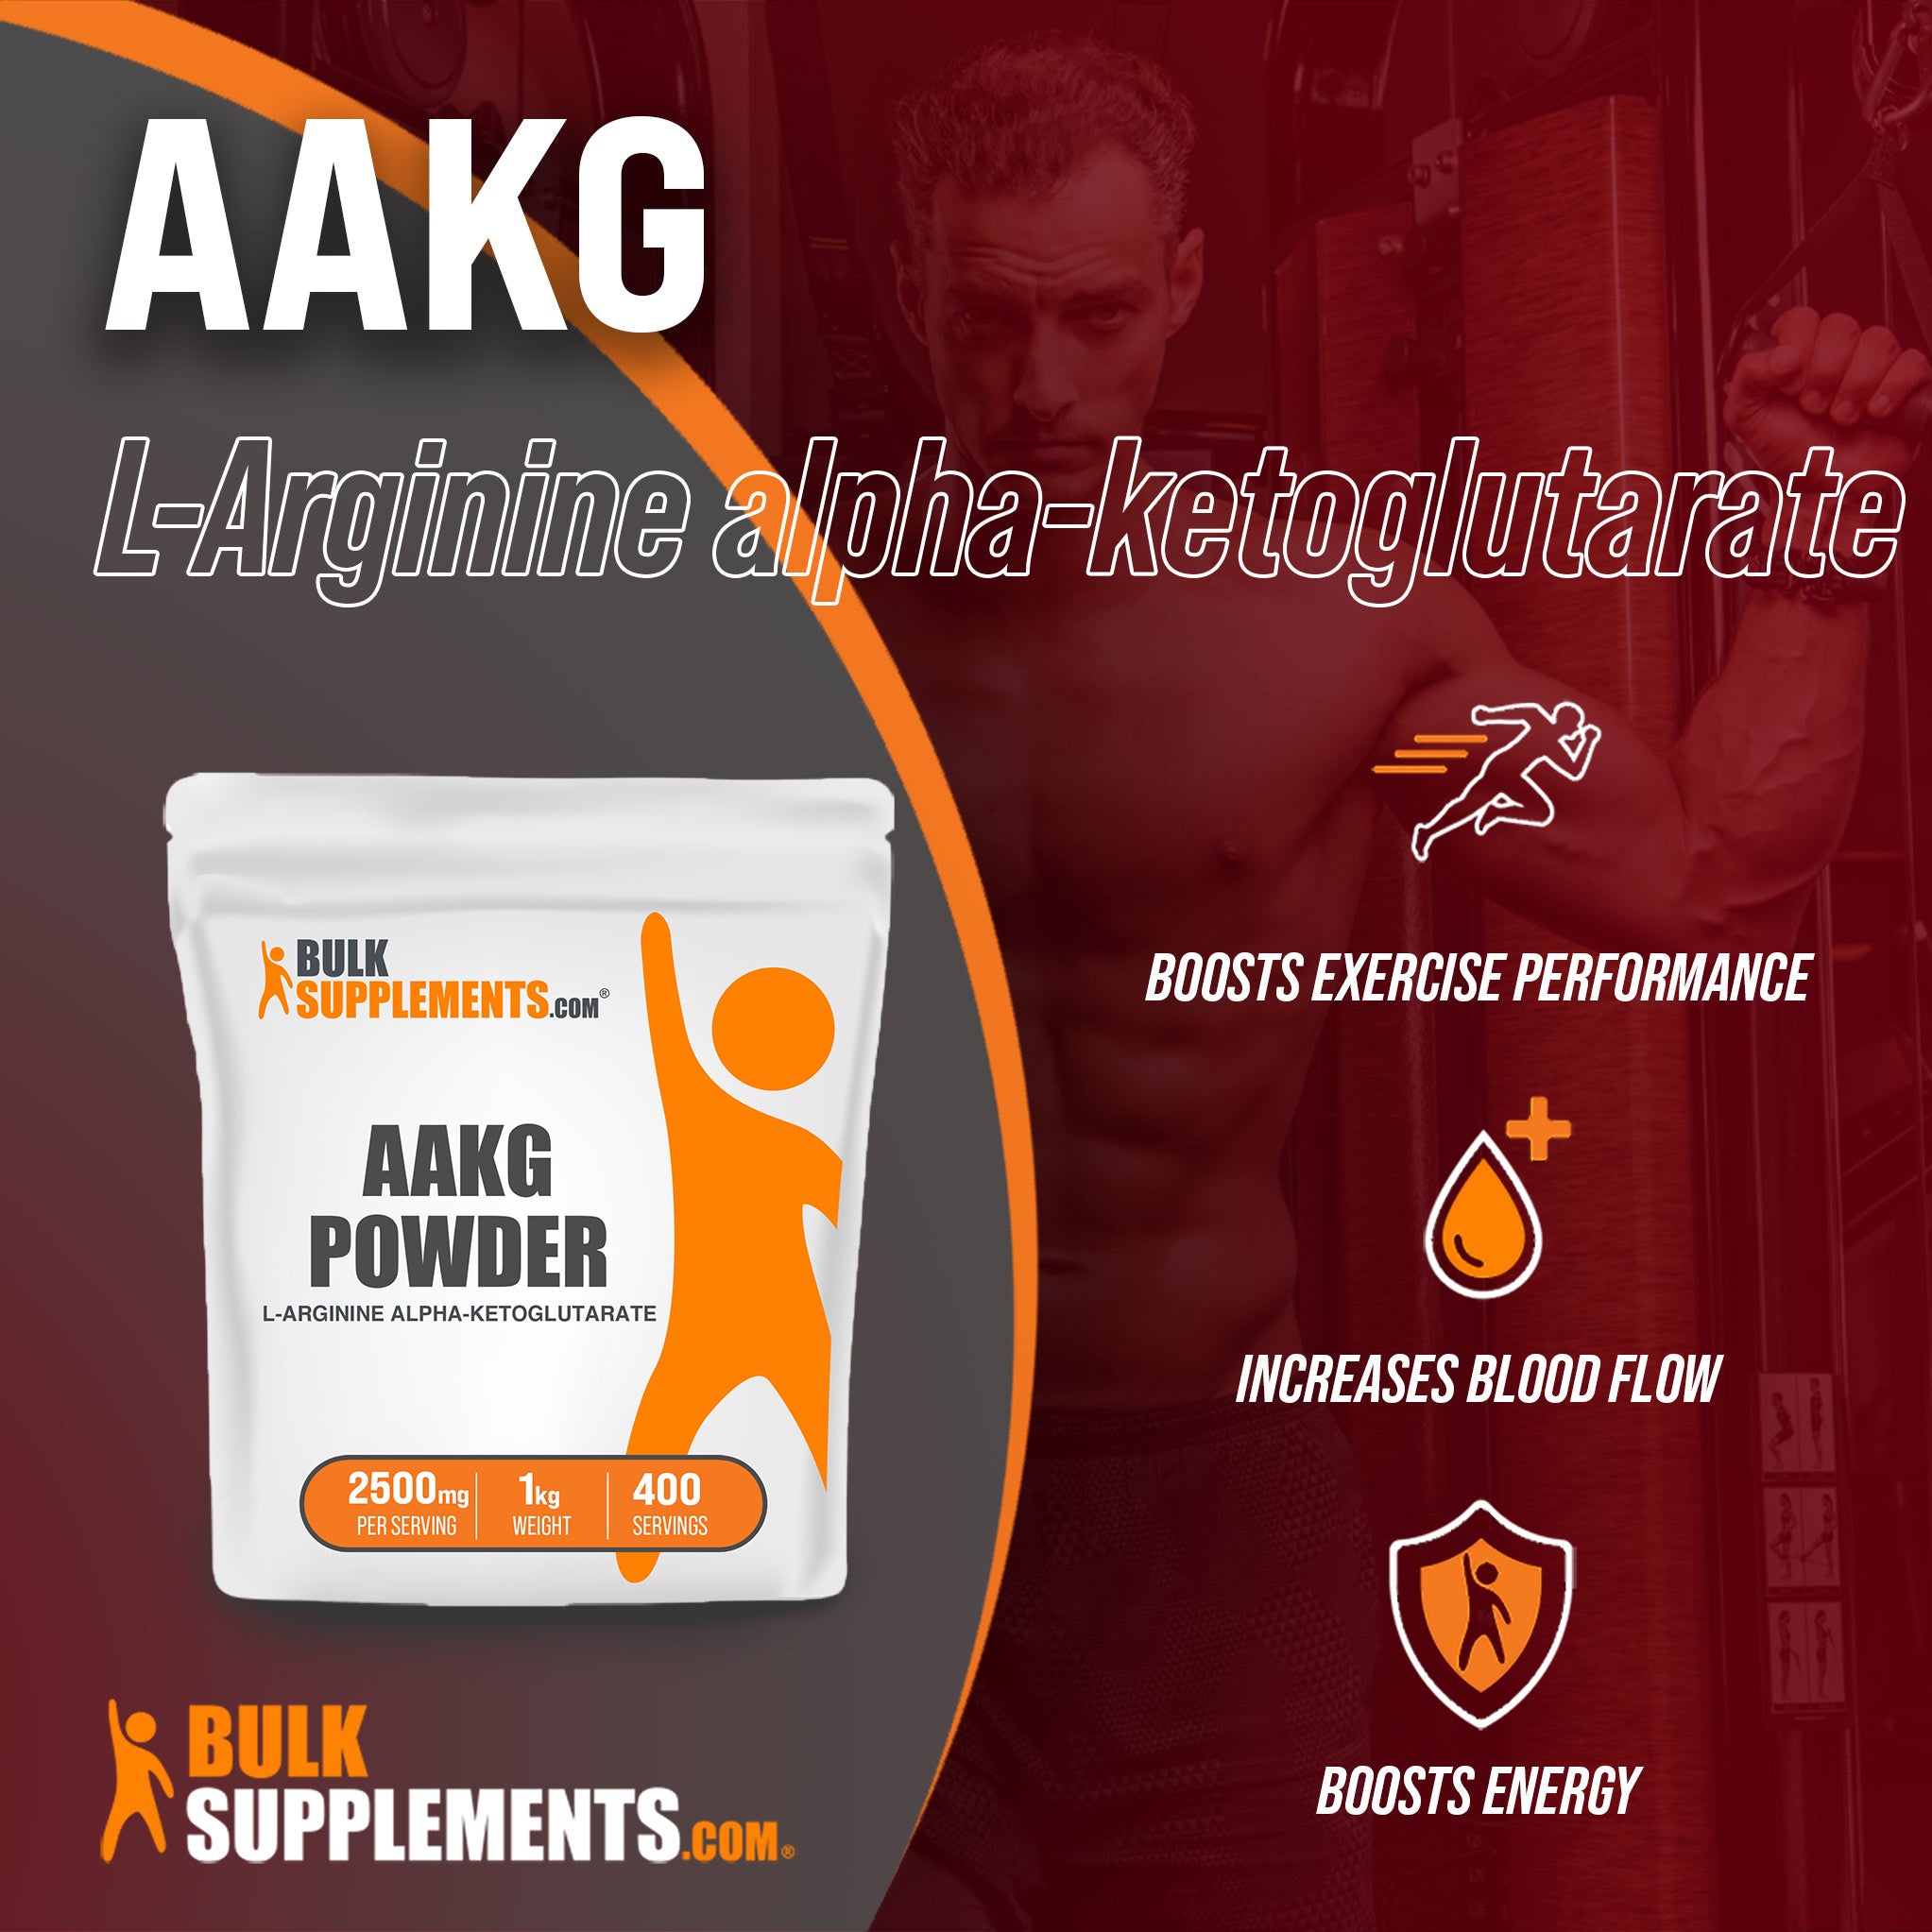 l arginine alpha-ketoglutarate (AAKG) Powder 